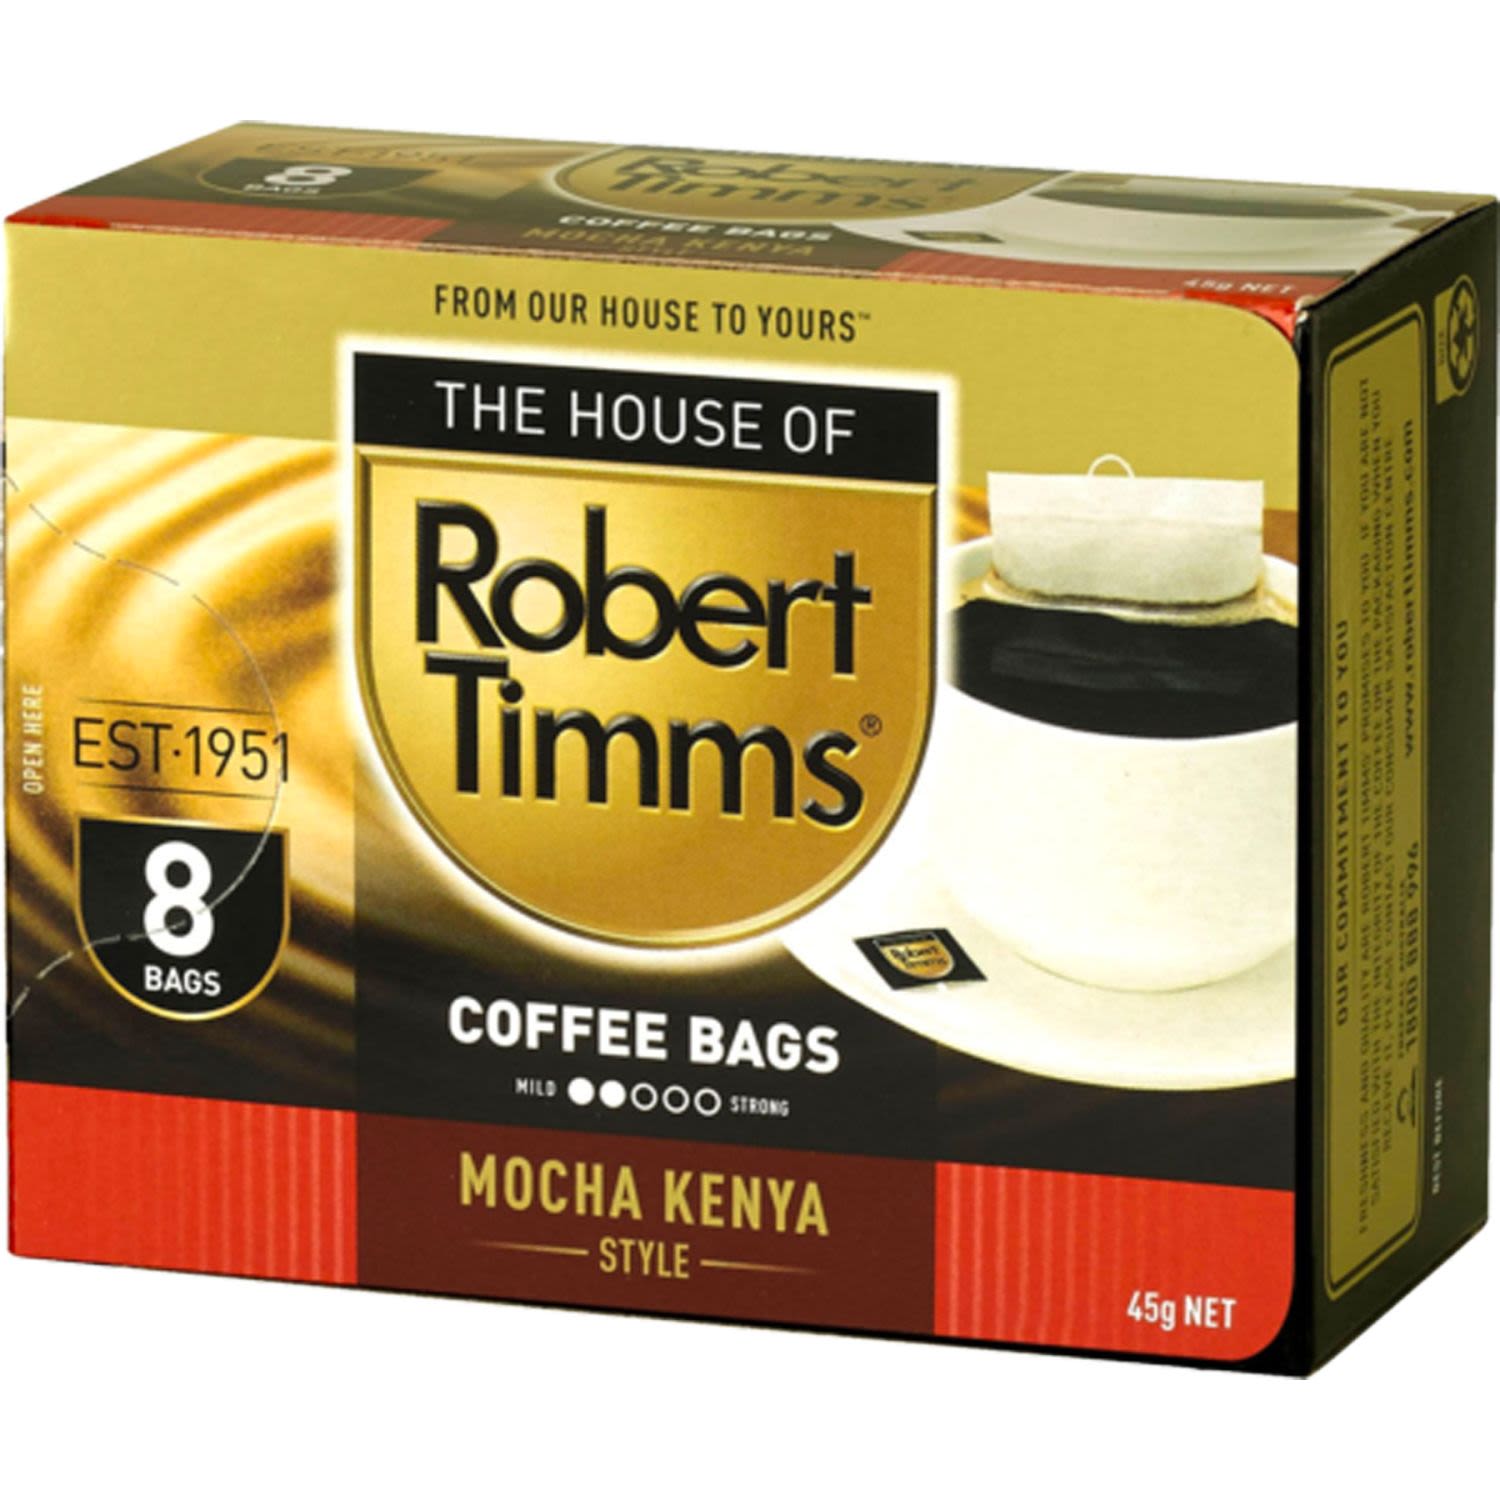 Robert Timms Coffee Bags Mocha Kenya Pack, 8 Each